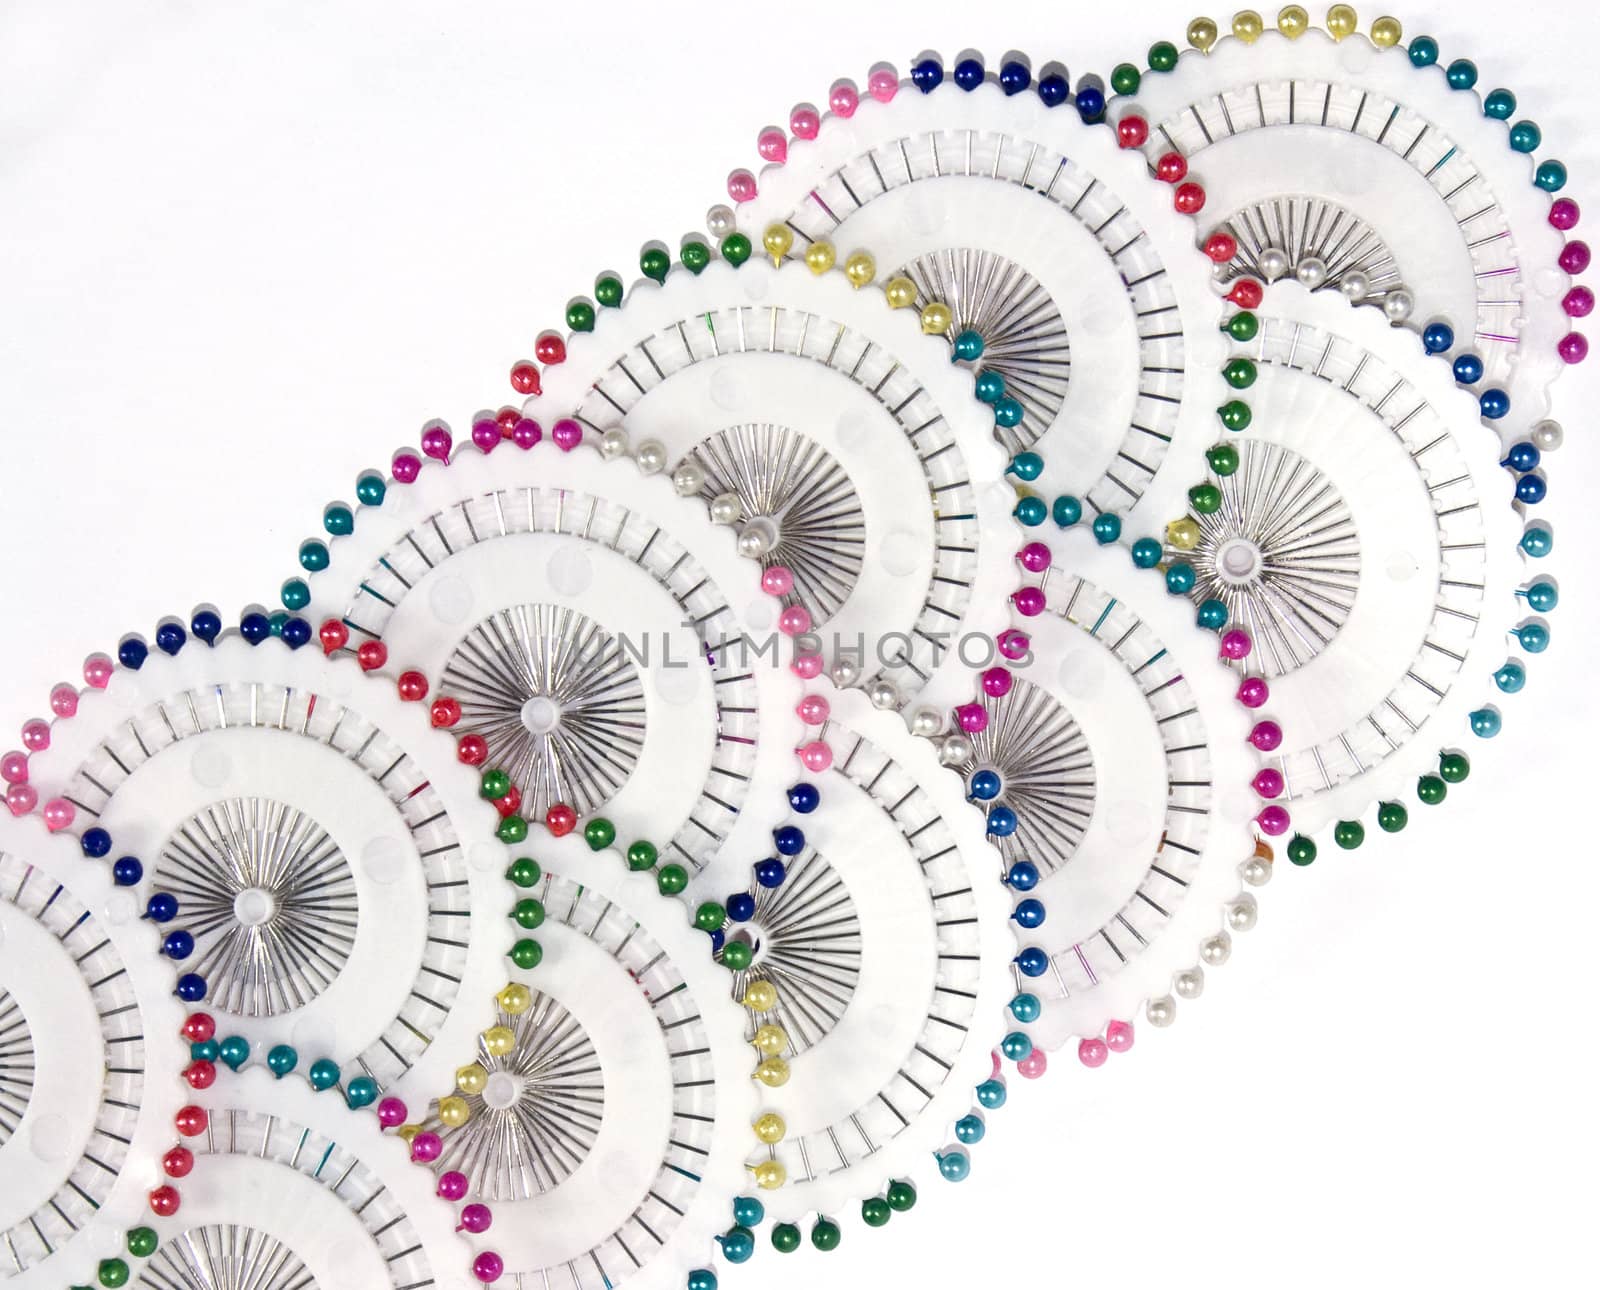 Multi-coloured needles 13 by soloir